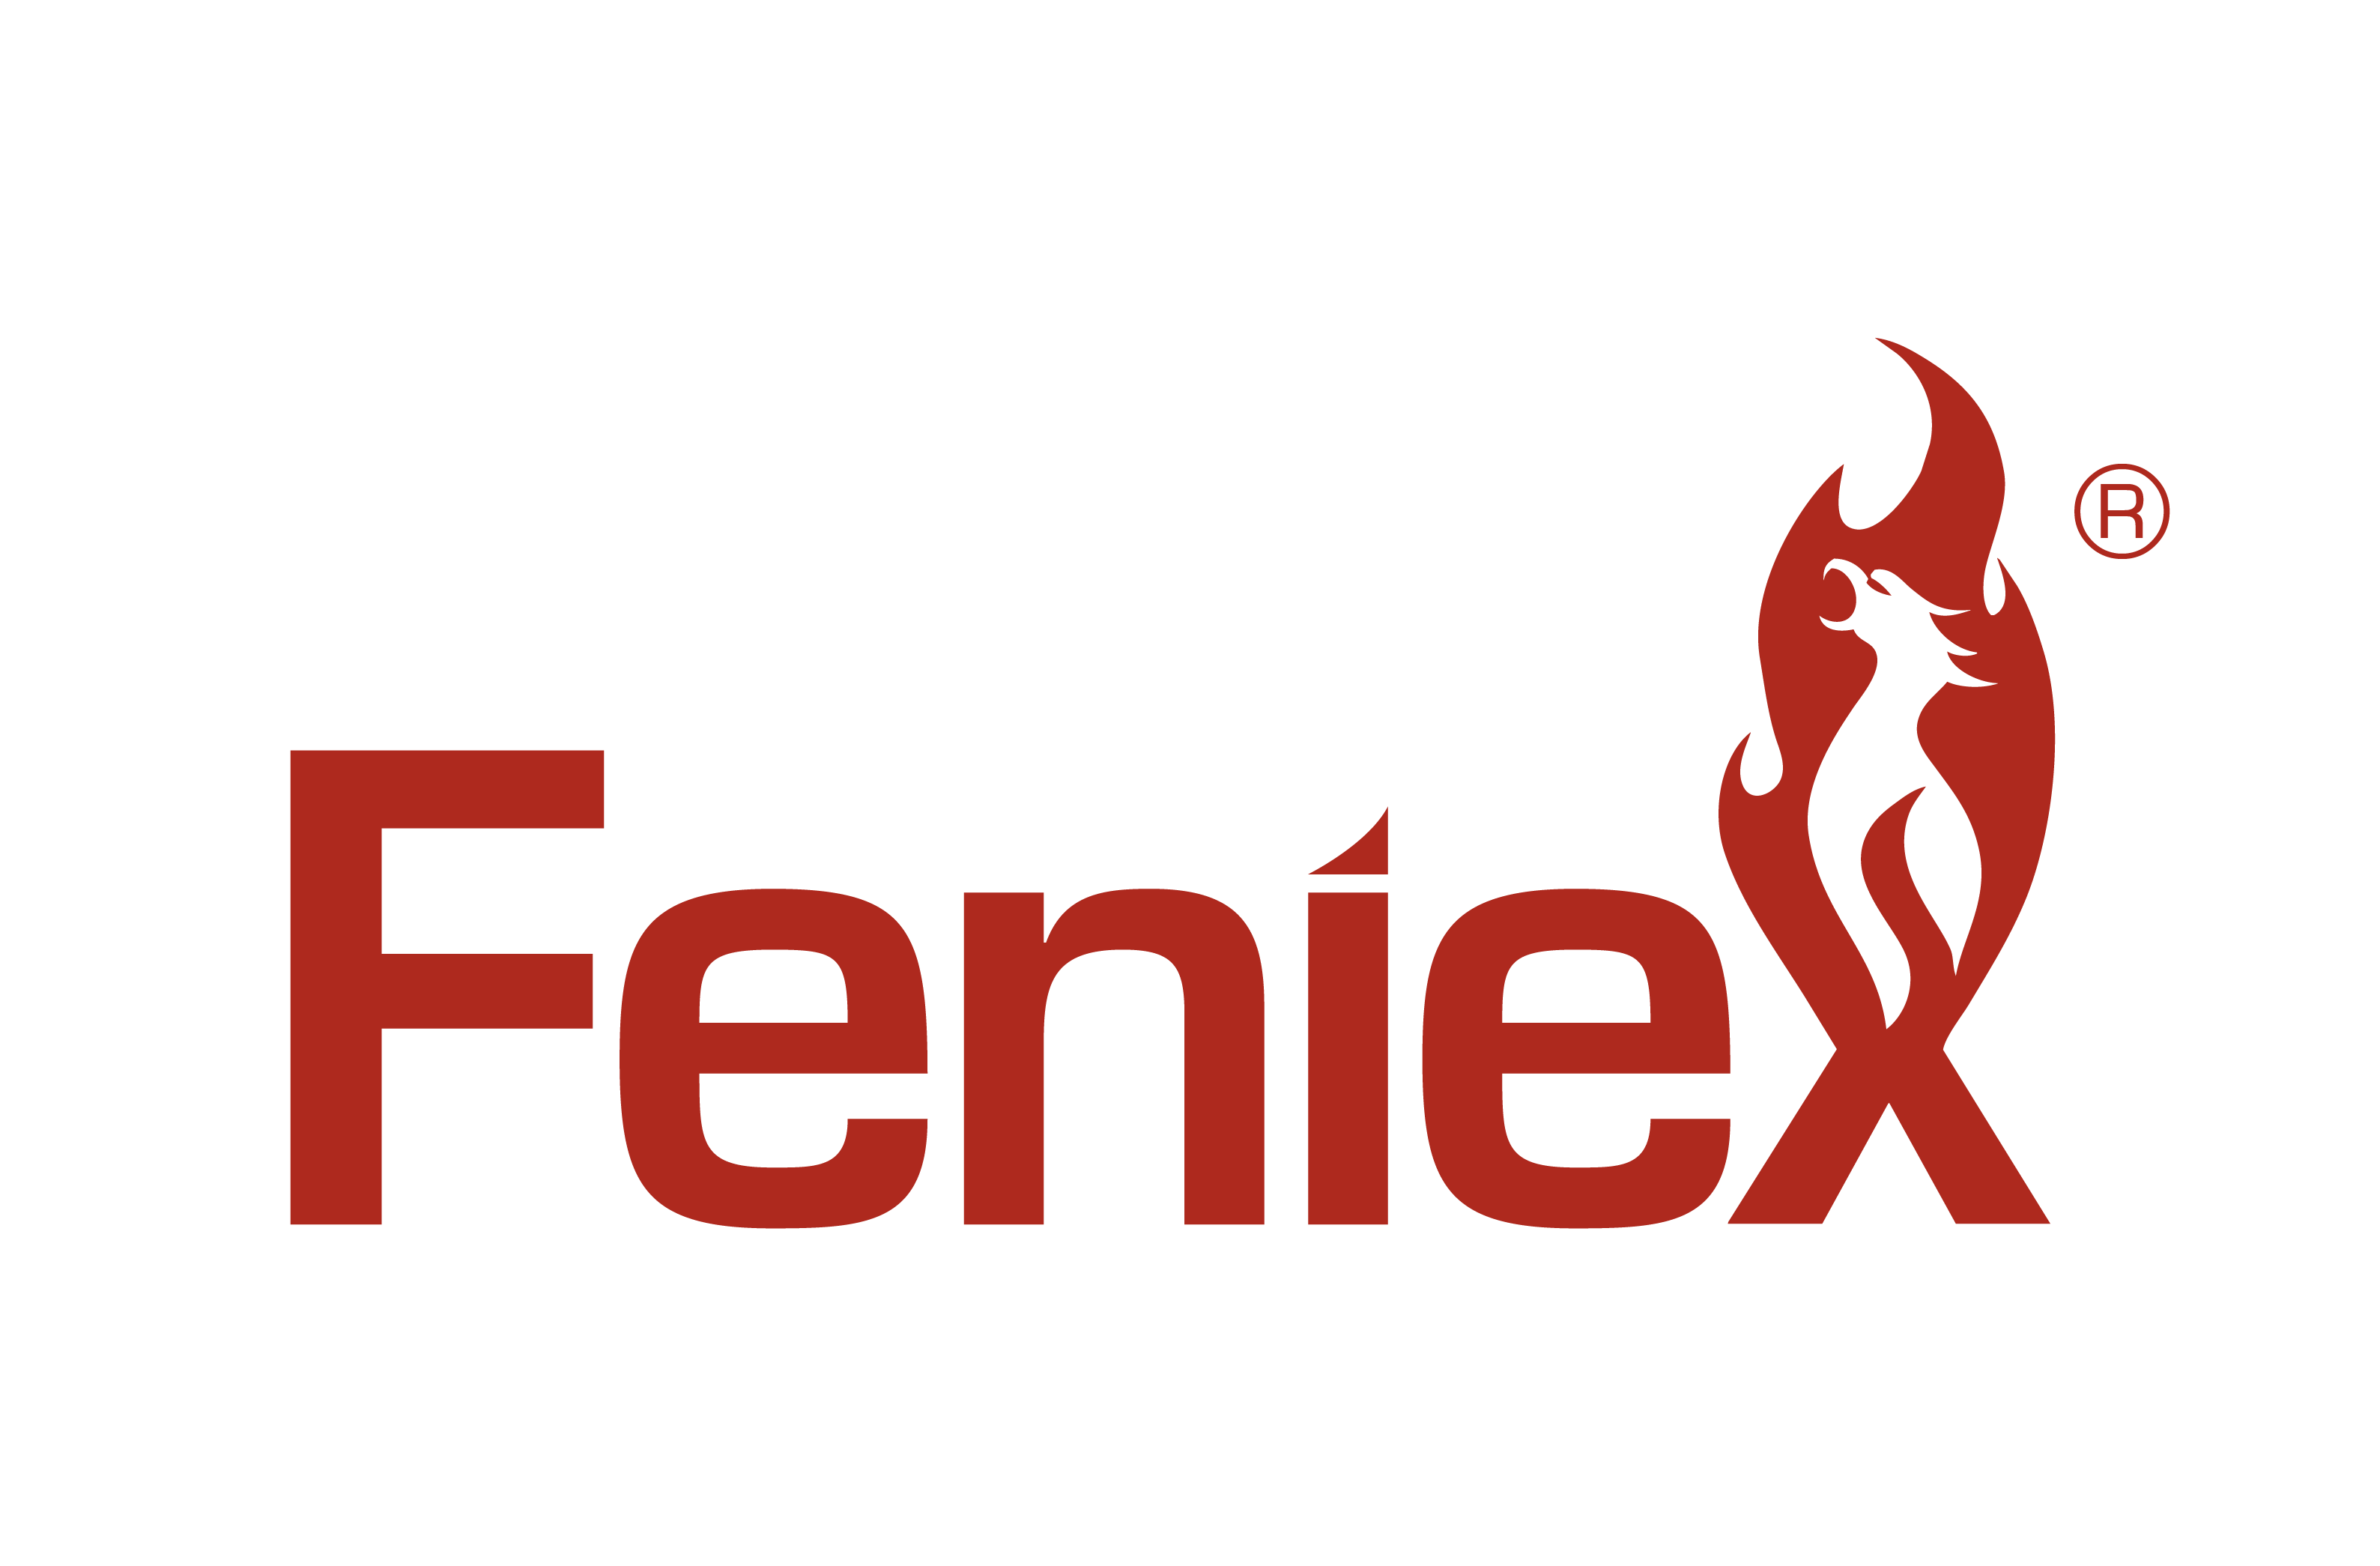 red-feniex-logo-03.png